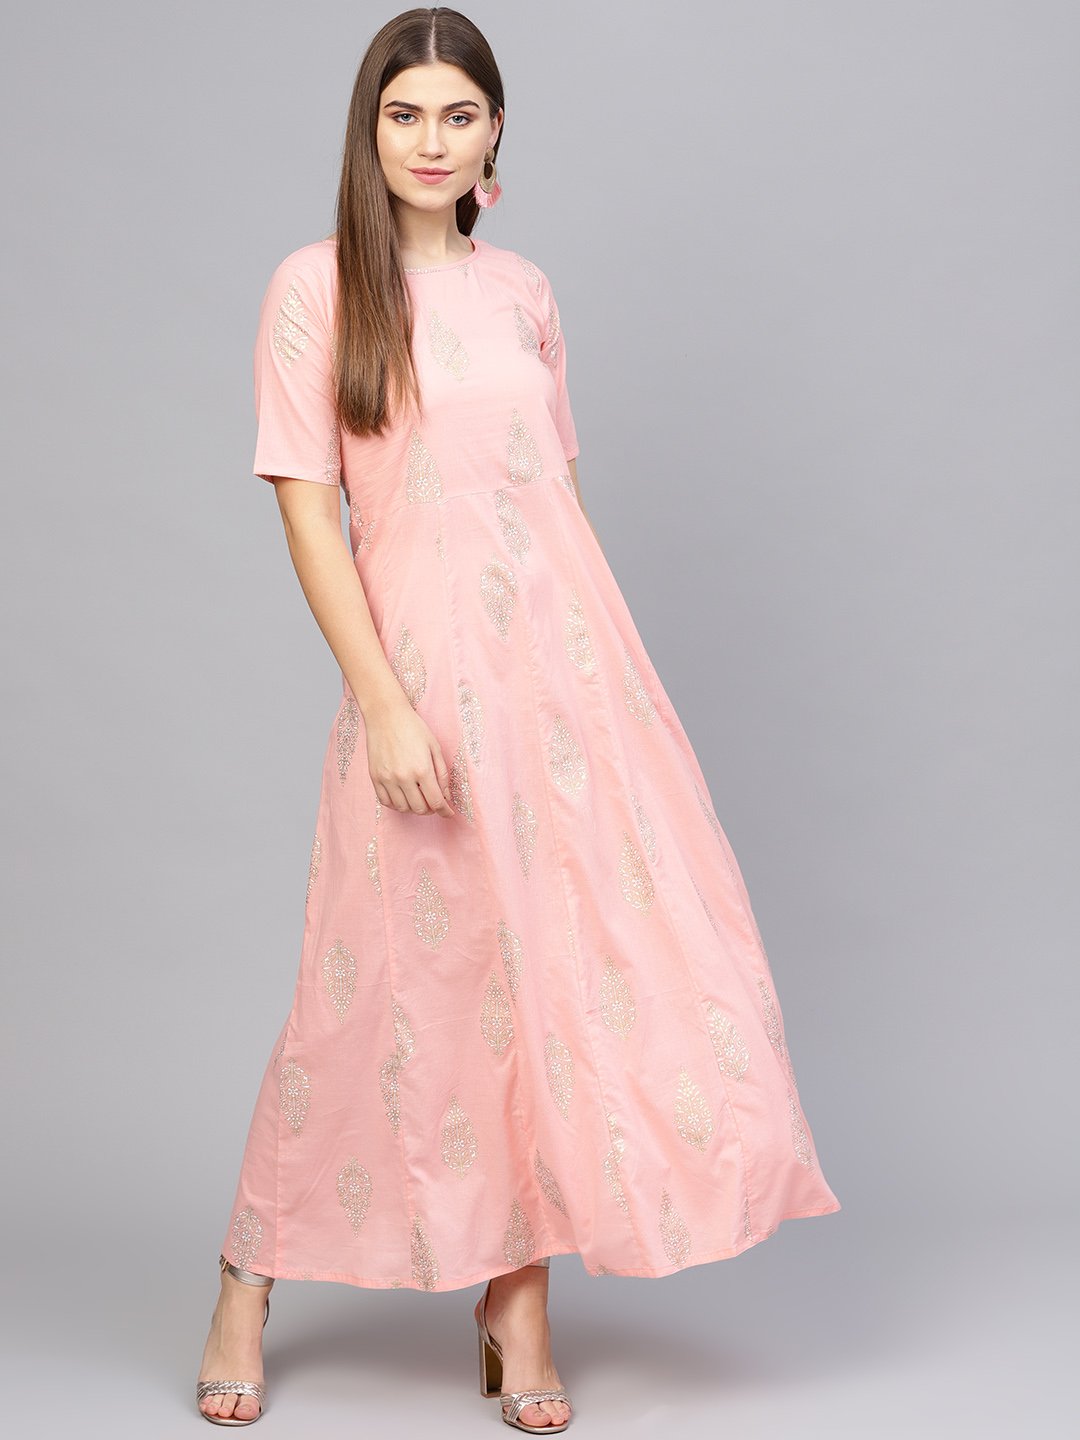 Women's Pink & Golden Printed Maxi Dress - Nayo Clothing